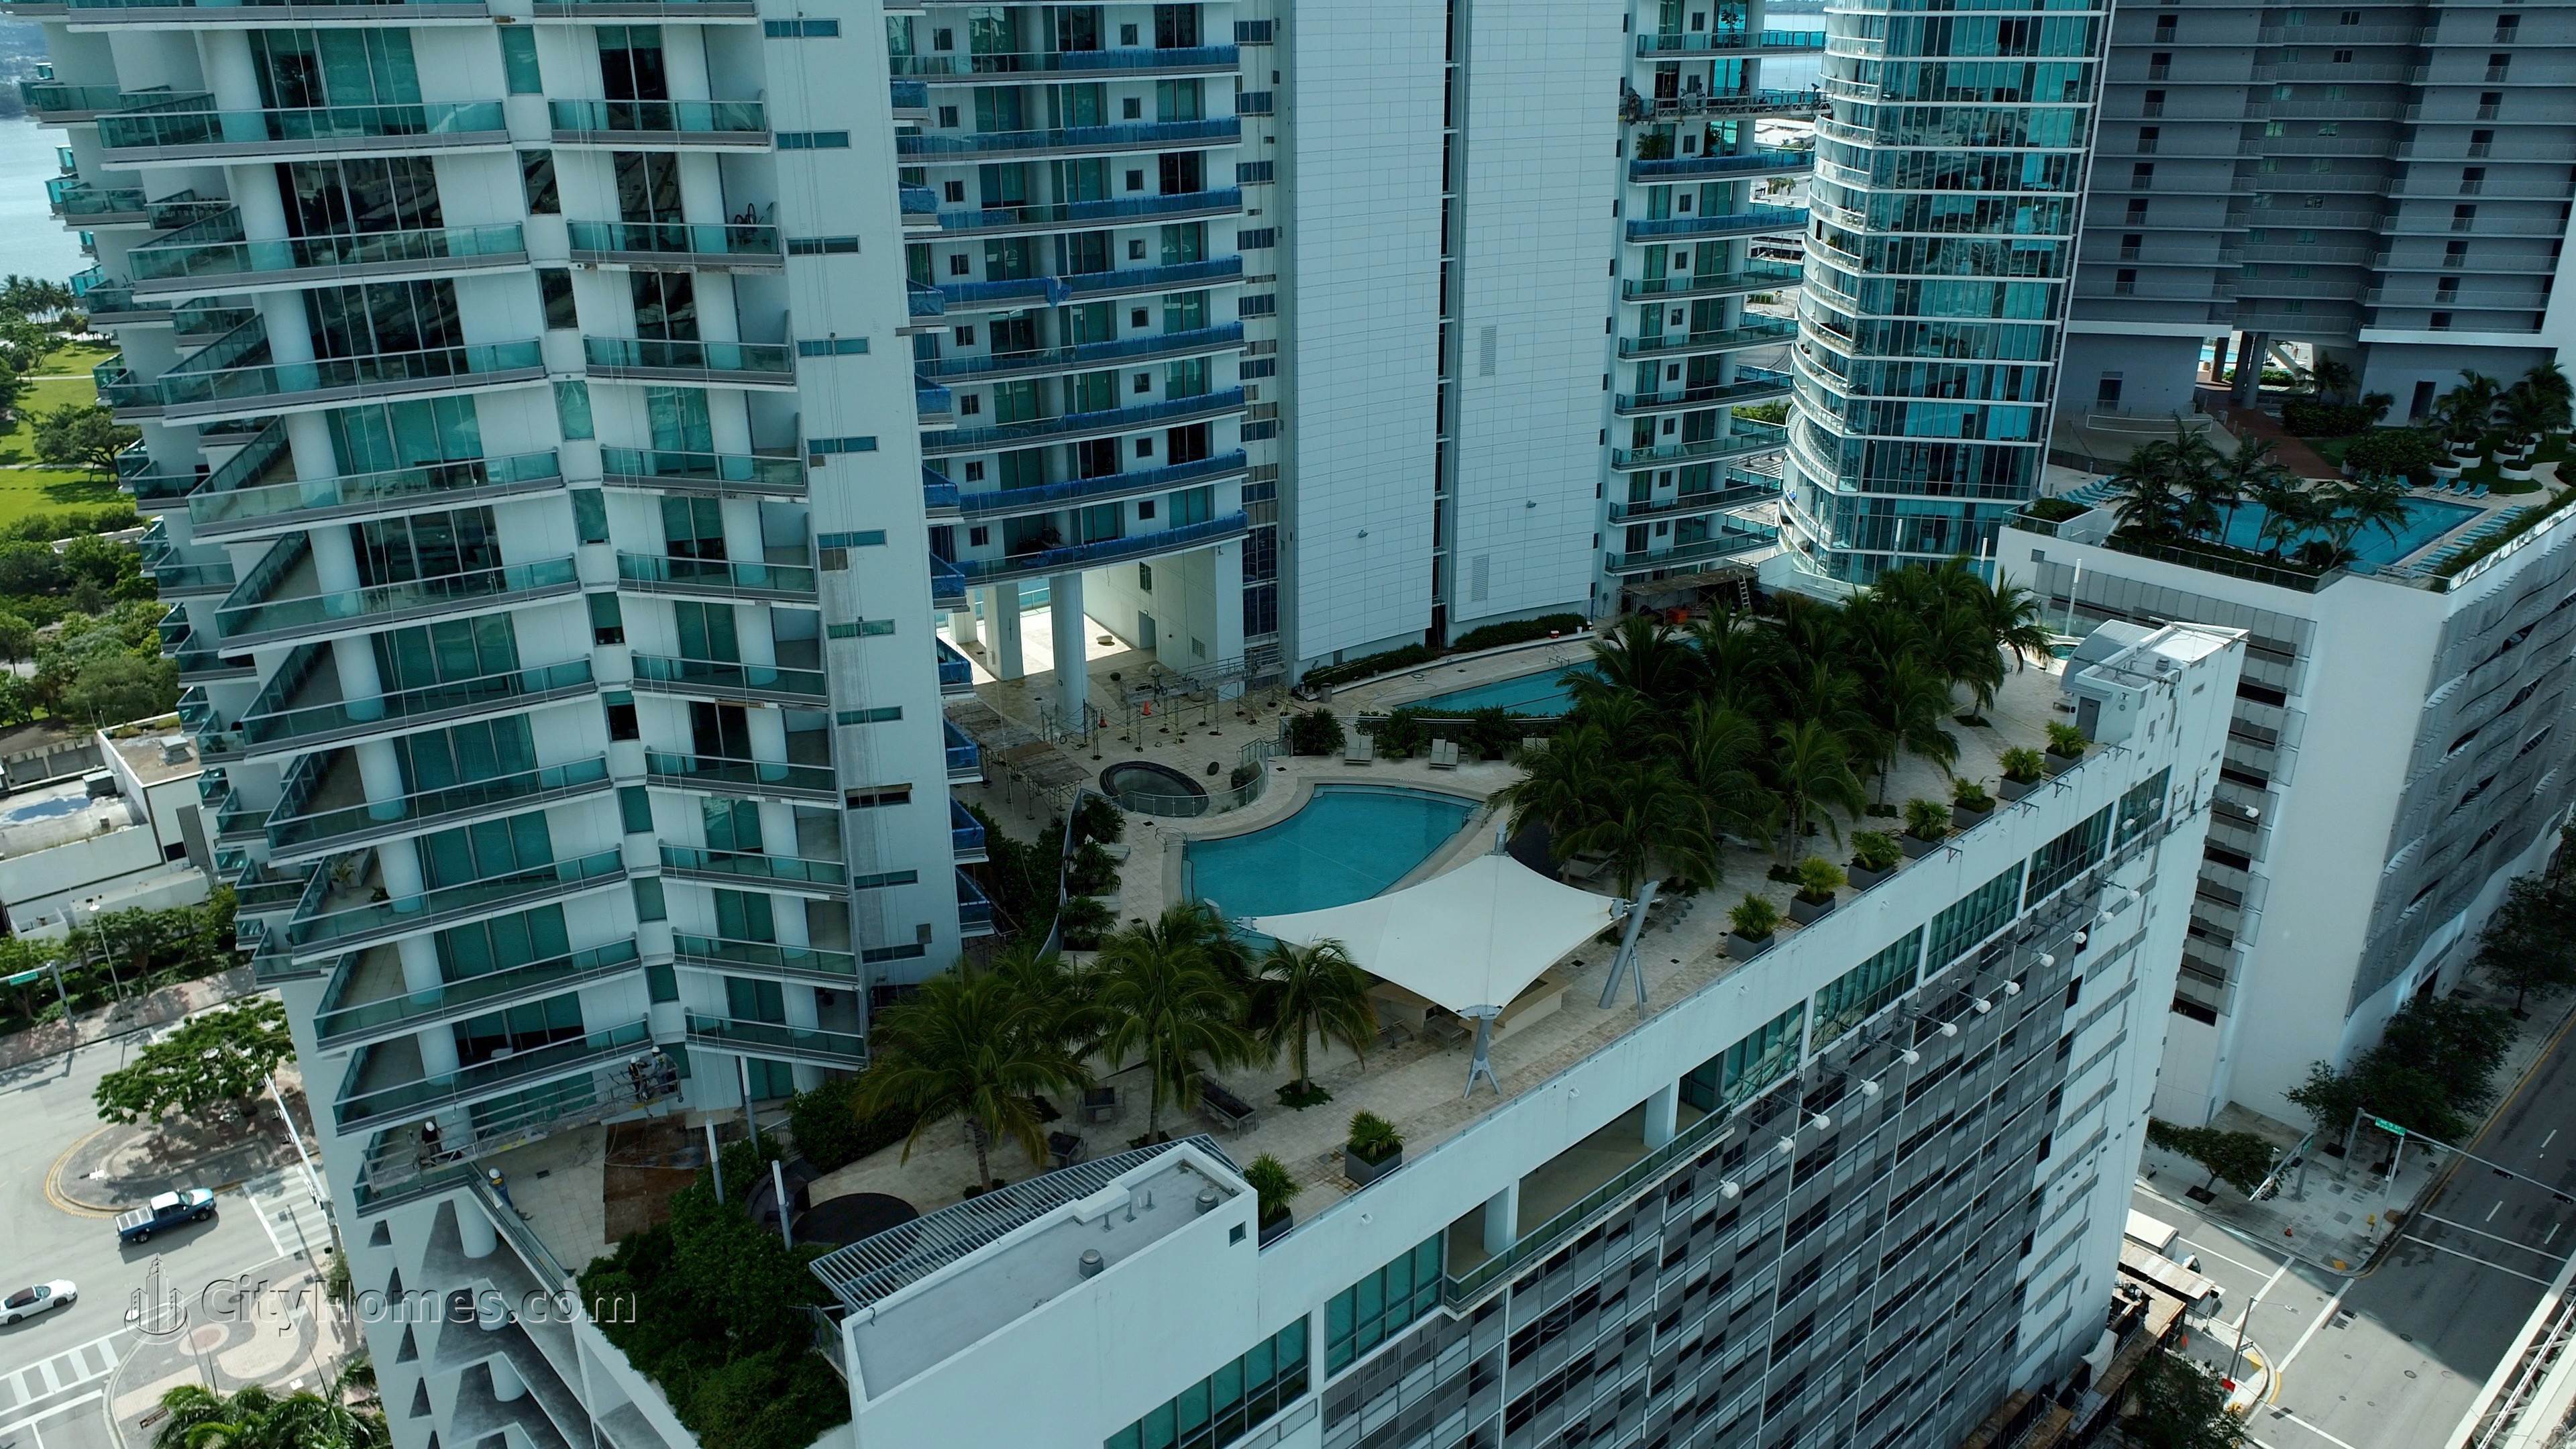 5. 900 Biscayne Bay byggnad vid 900 Biscayne Boulevard, Miami, FL 33132